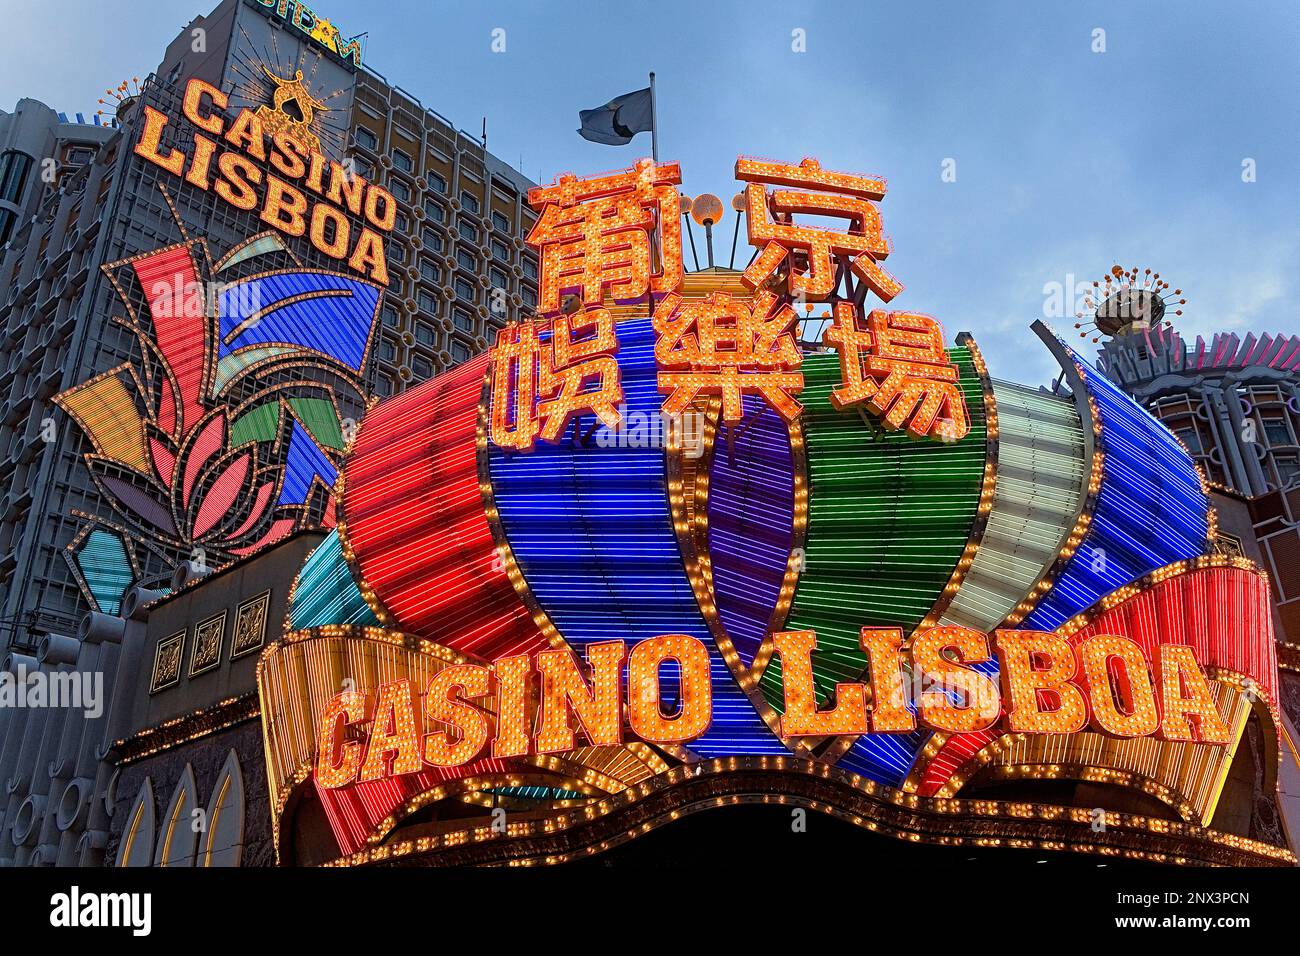 Grand Lisboa casino,Macau,China Stock Photo